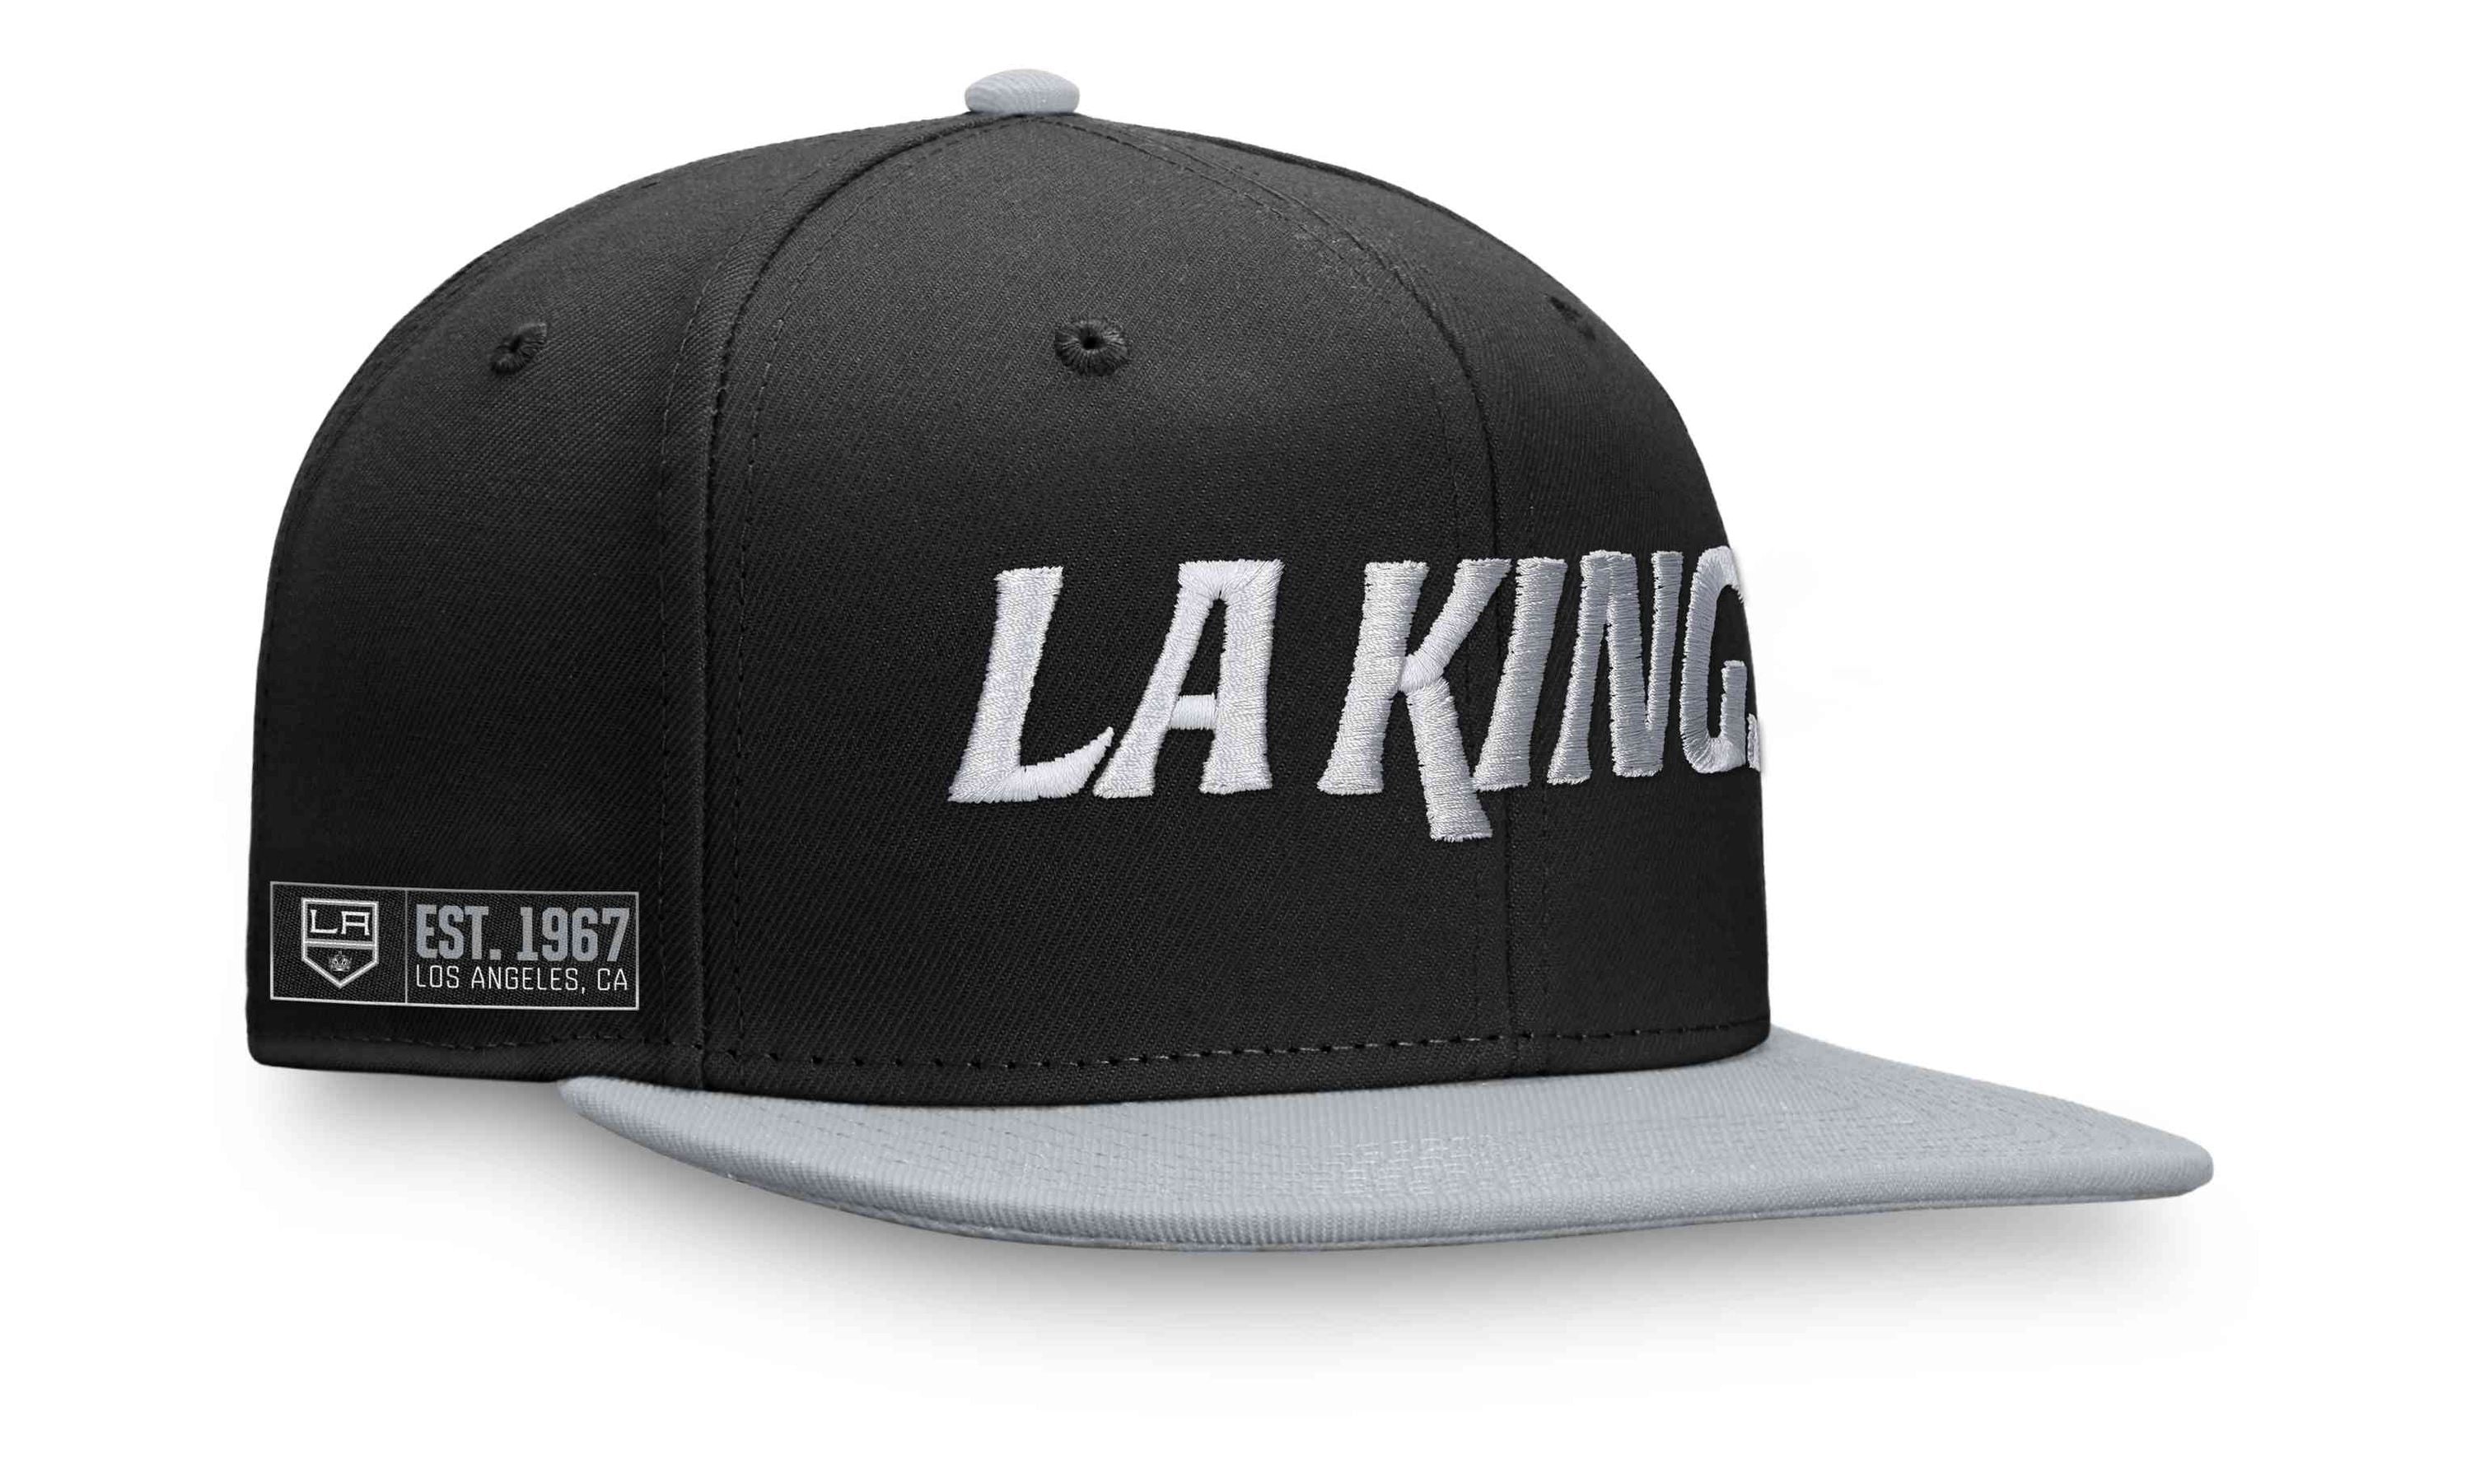 Fanatics - NHL Los Angeles Kings Iconic Color Blocked Snapback Cap